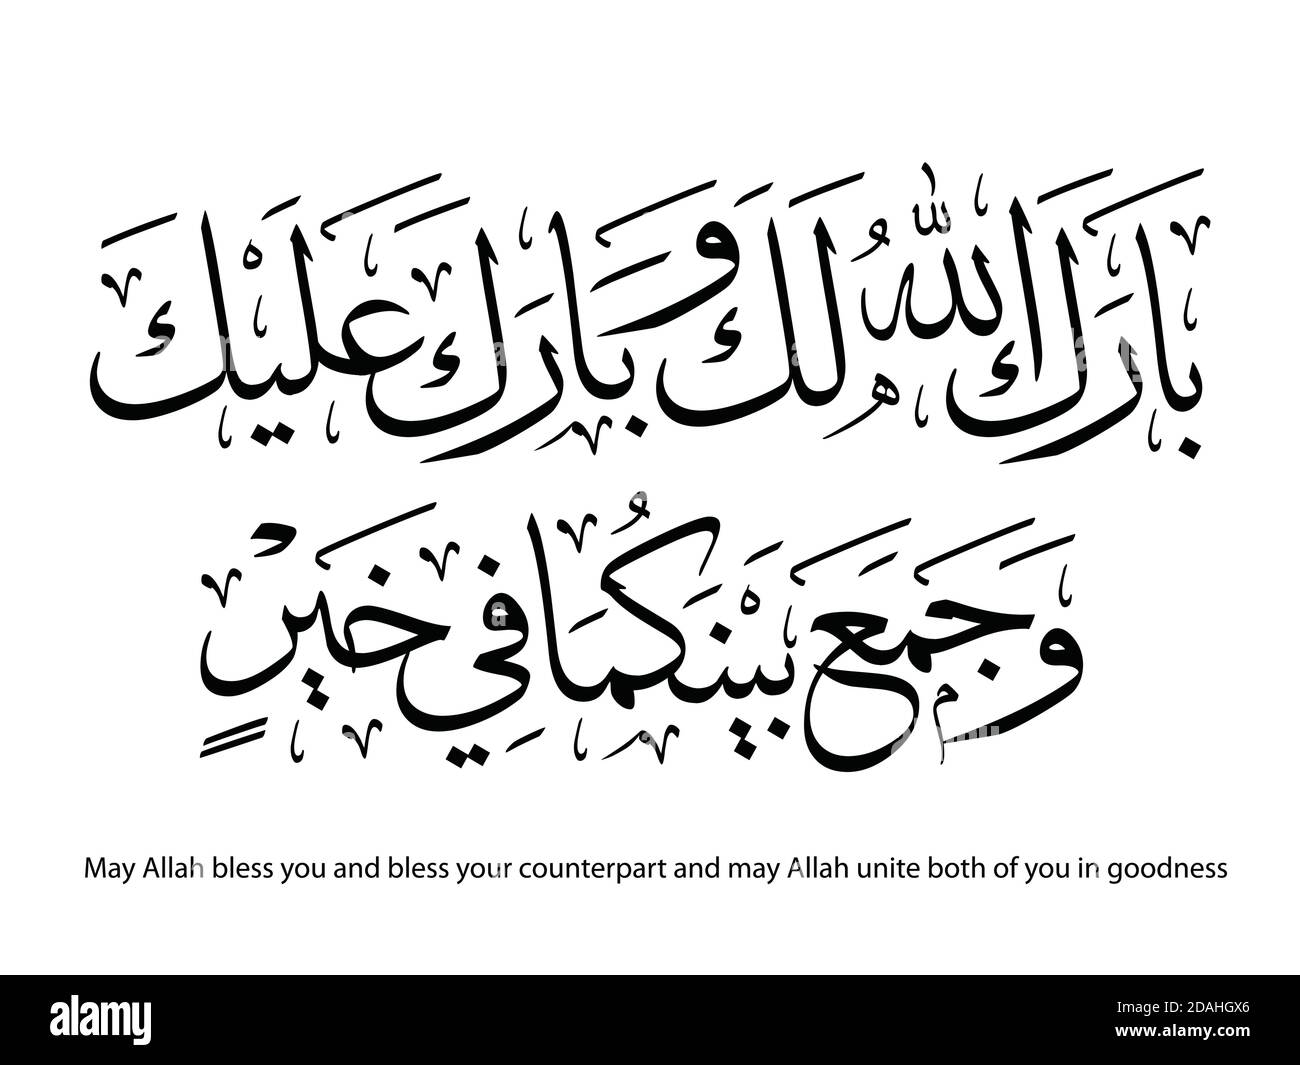 Wishes for Muslim Couples Arabic Calligraphy - Barakallahu laka Stock Vector